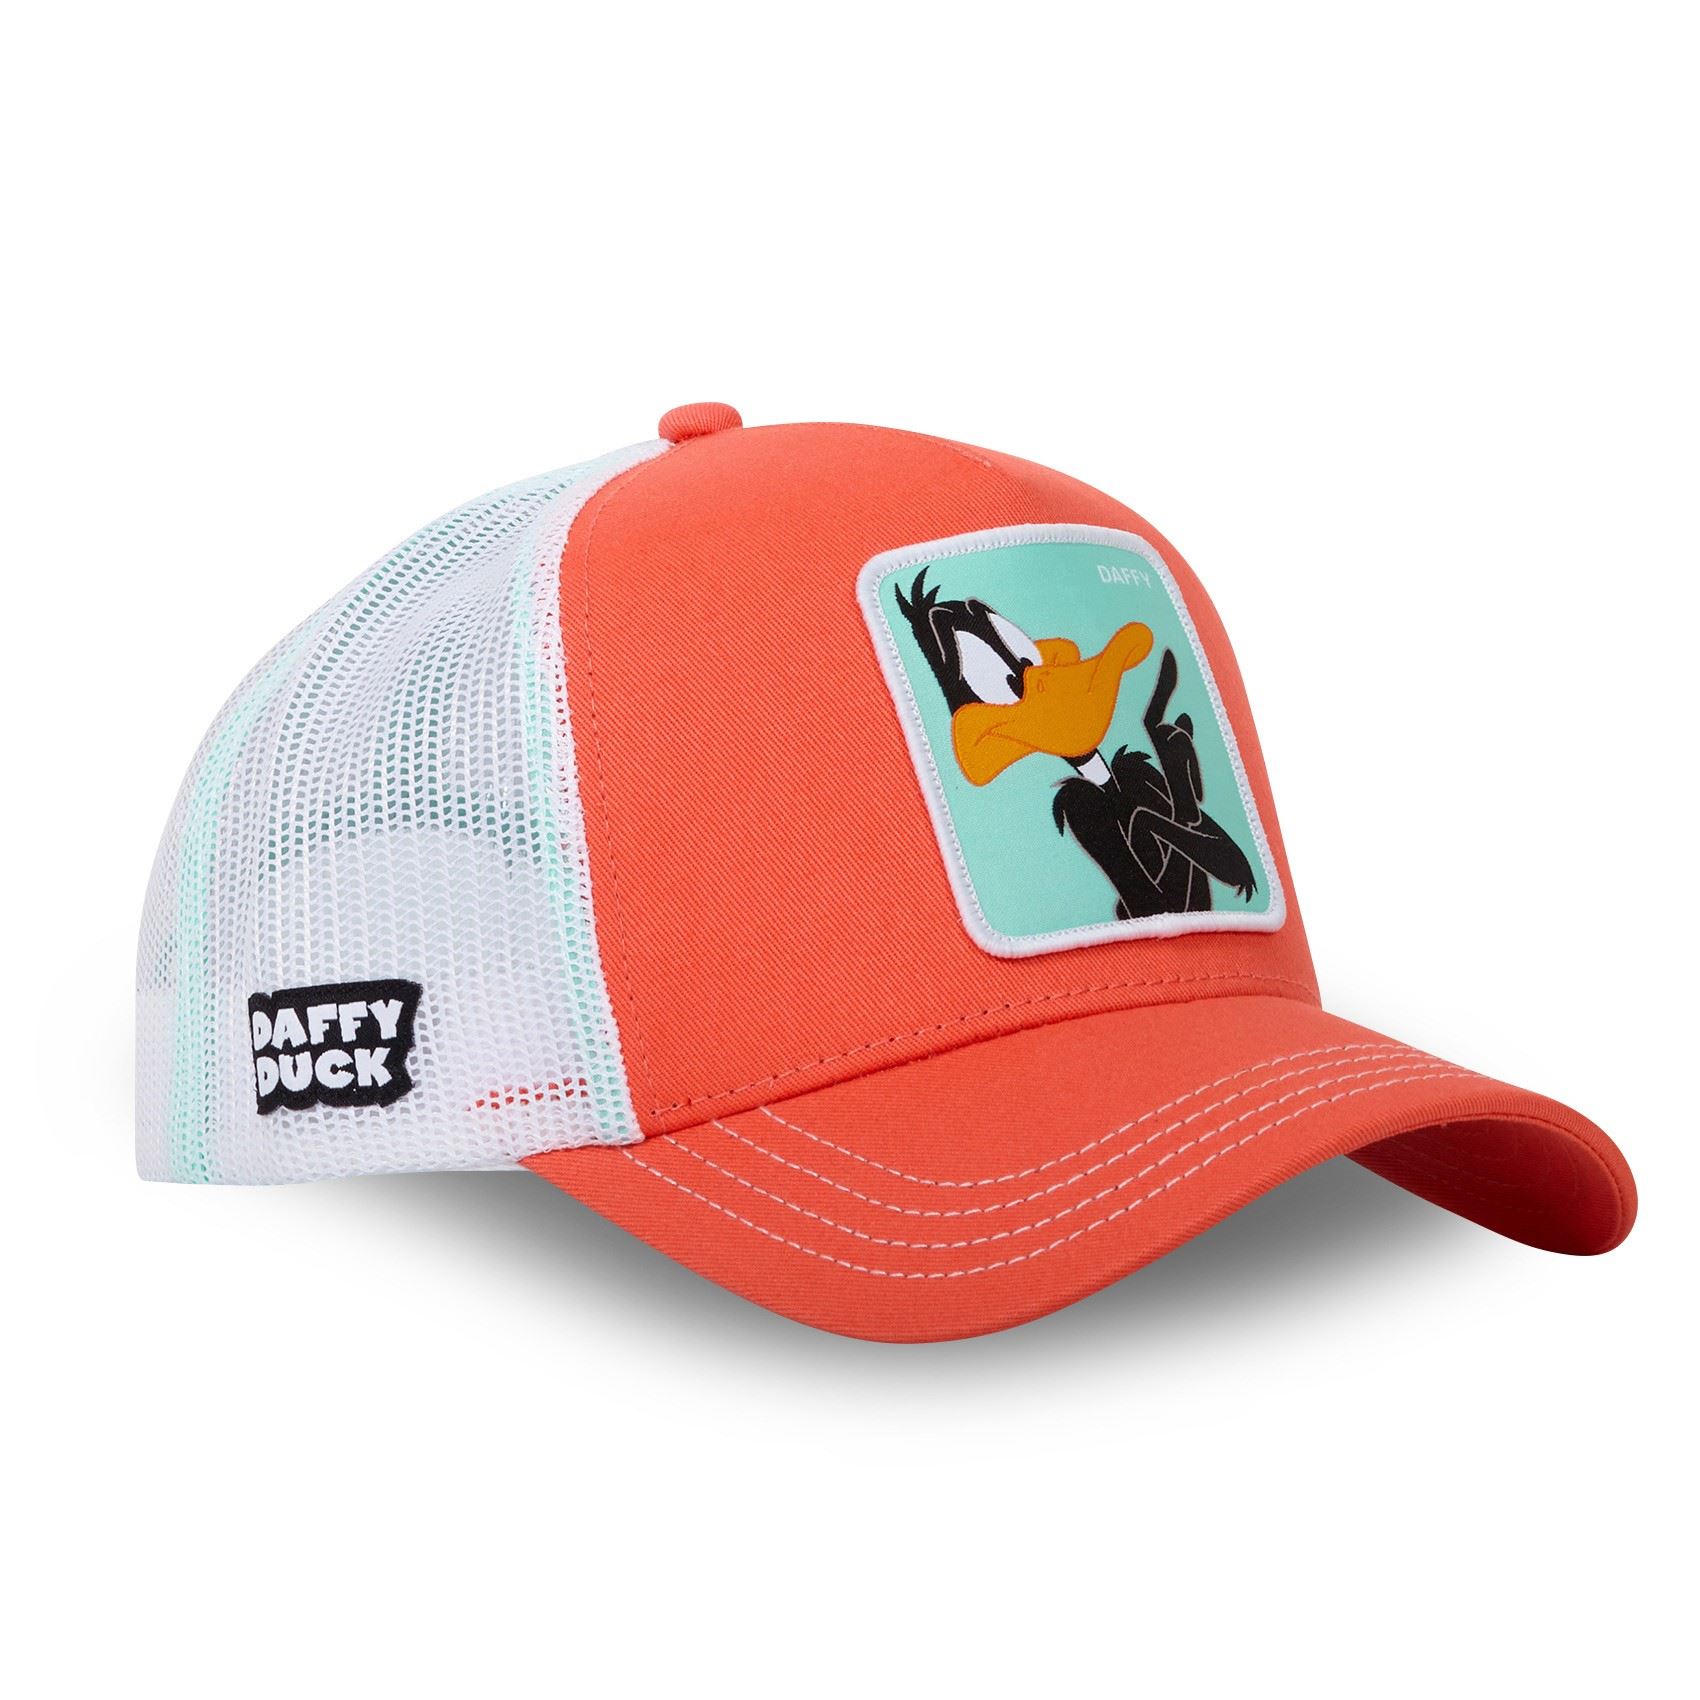 Daffy Duck Looney Tunes Apricot Trucker Cap Capslab